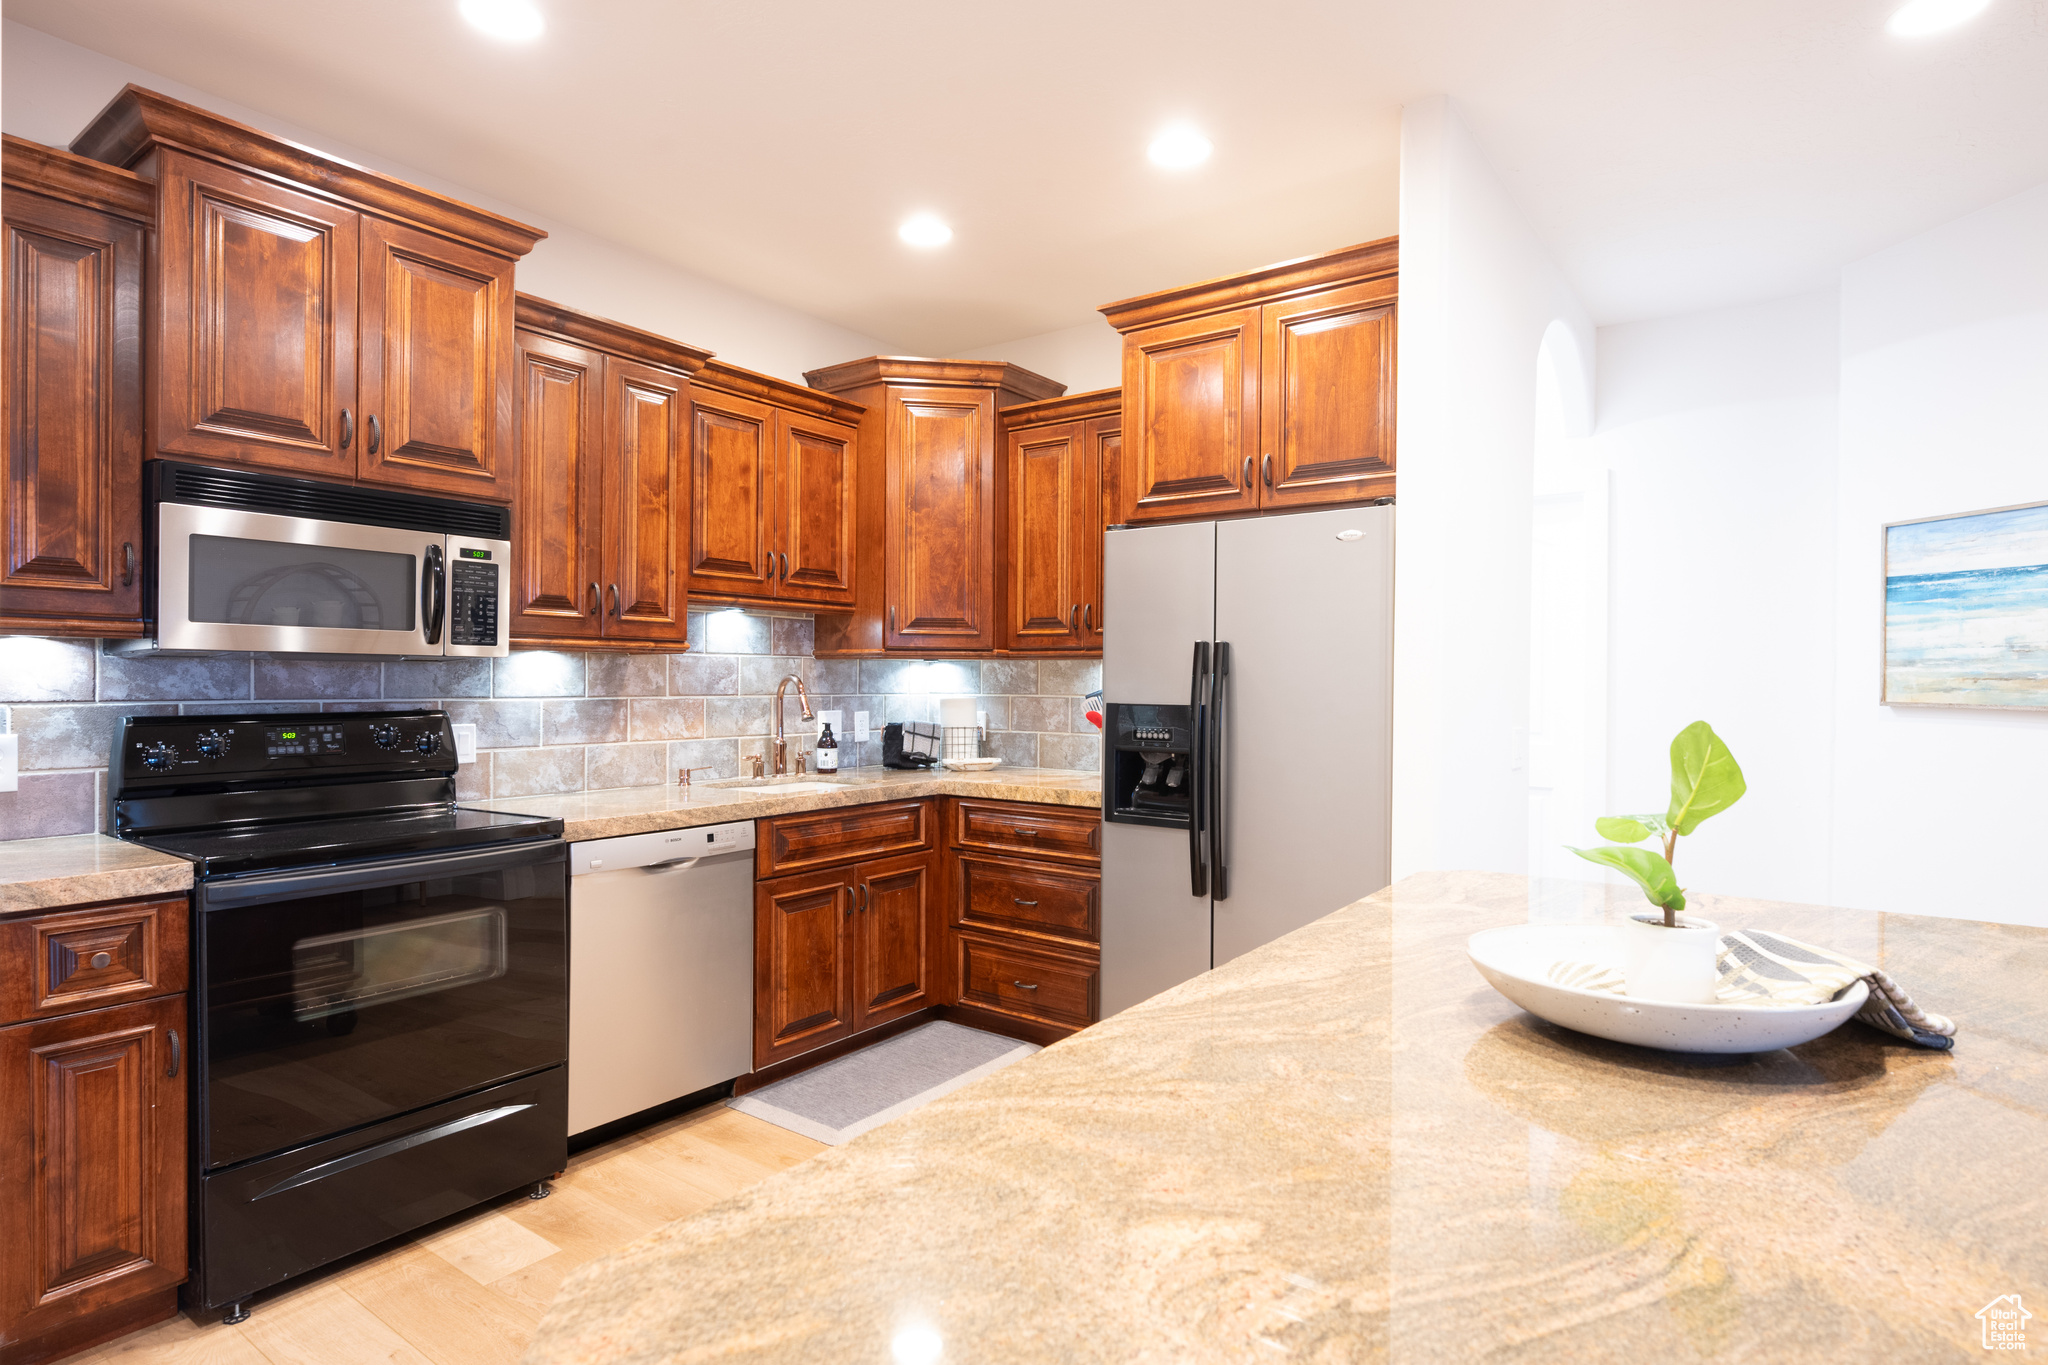 Kitchen featuring stainless steel appliances, light stone countertops, tasteful backsplash, light hardwood / wood-style flooring, and sink